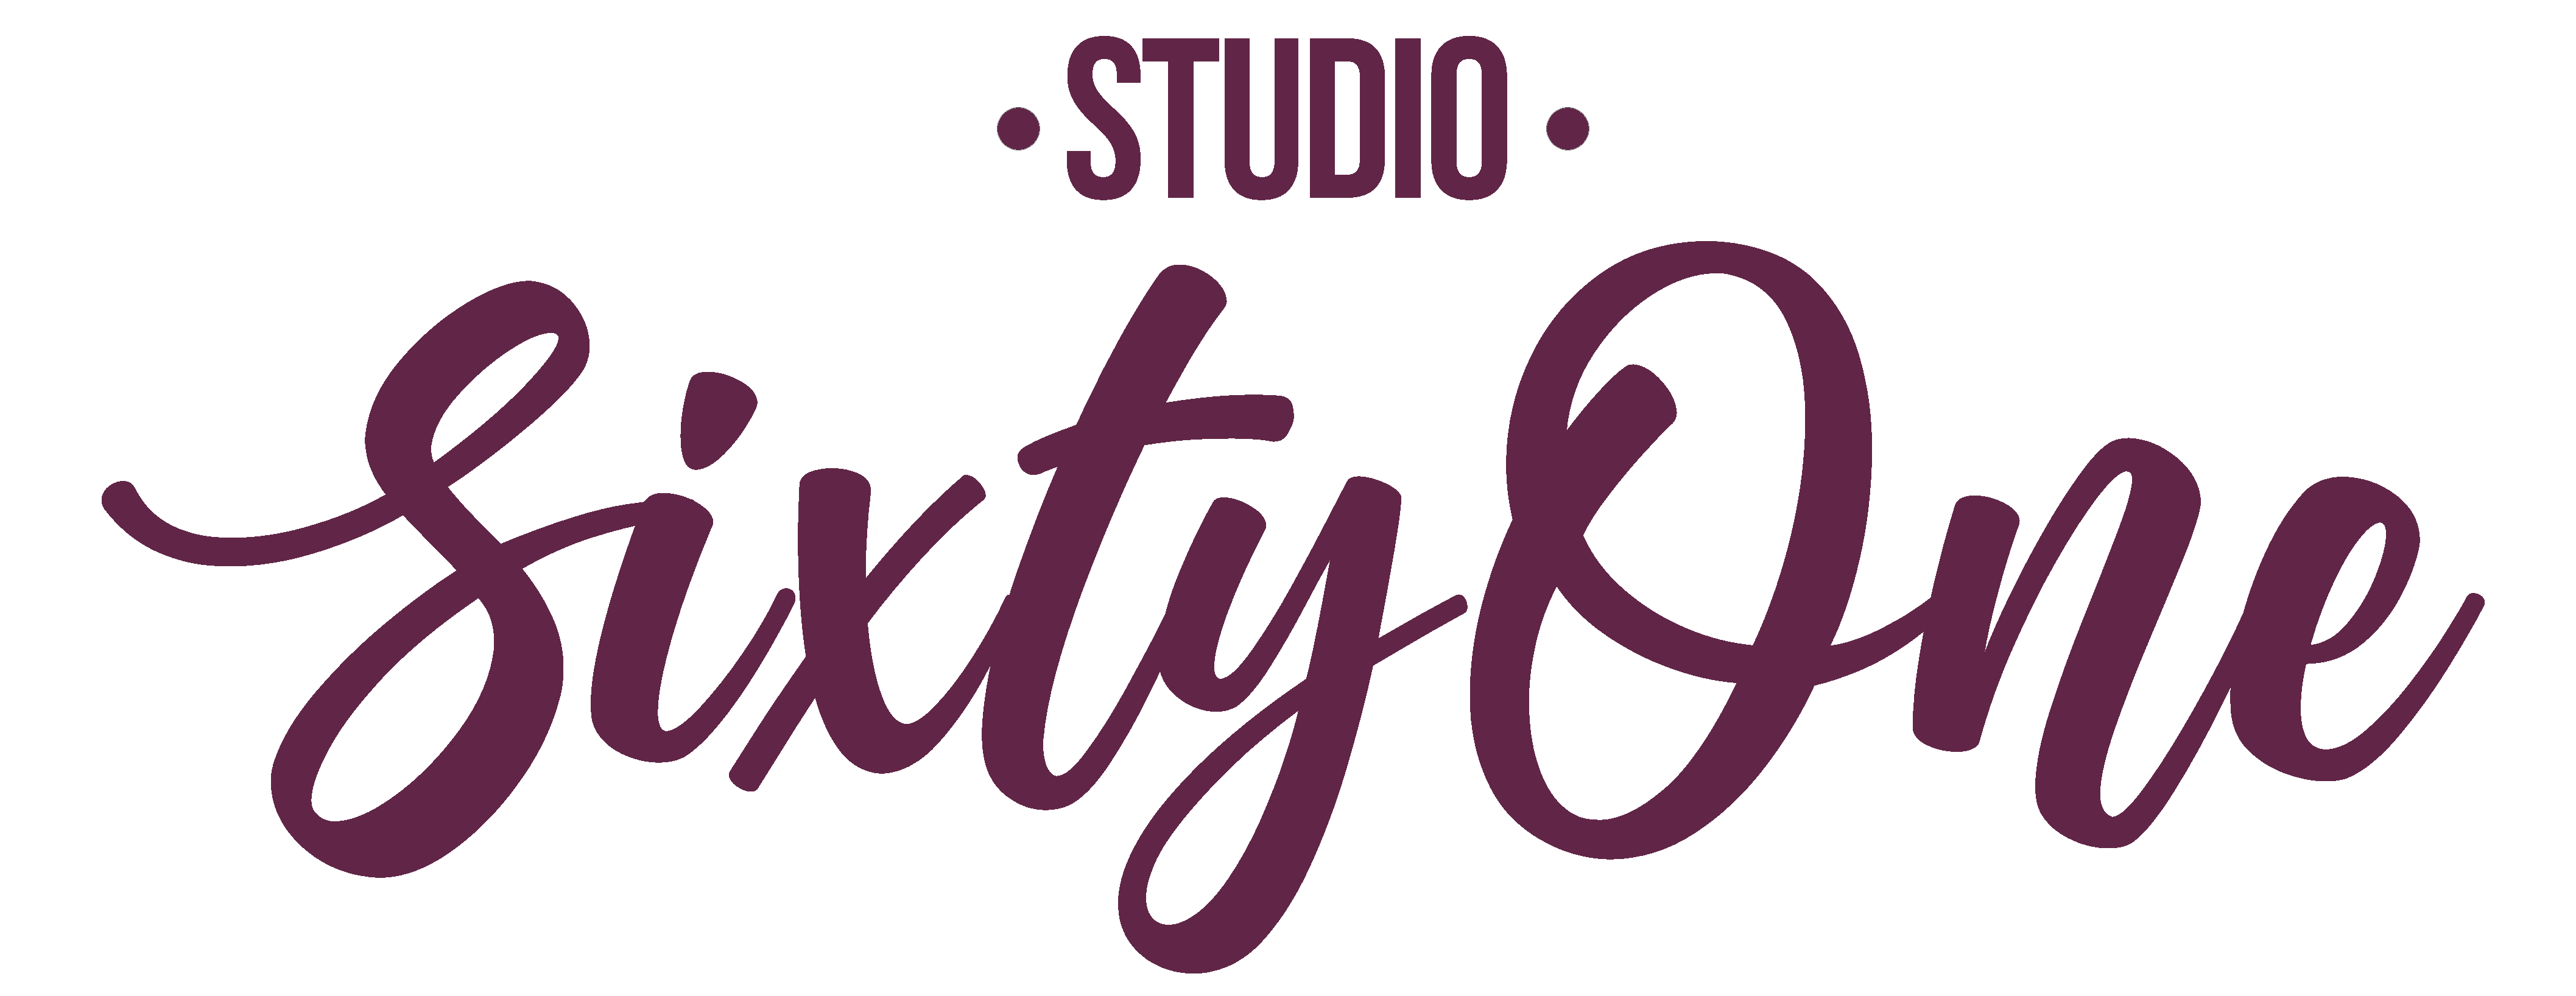 Studio SixtyOne